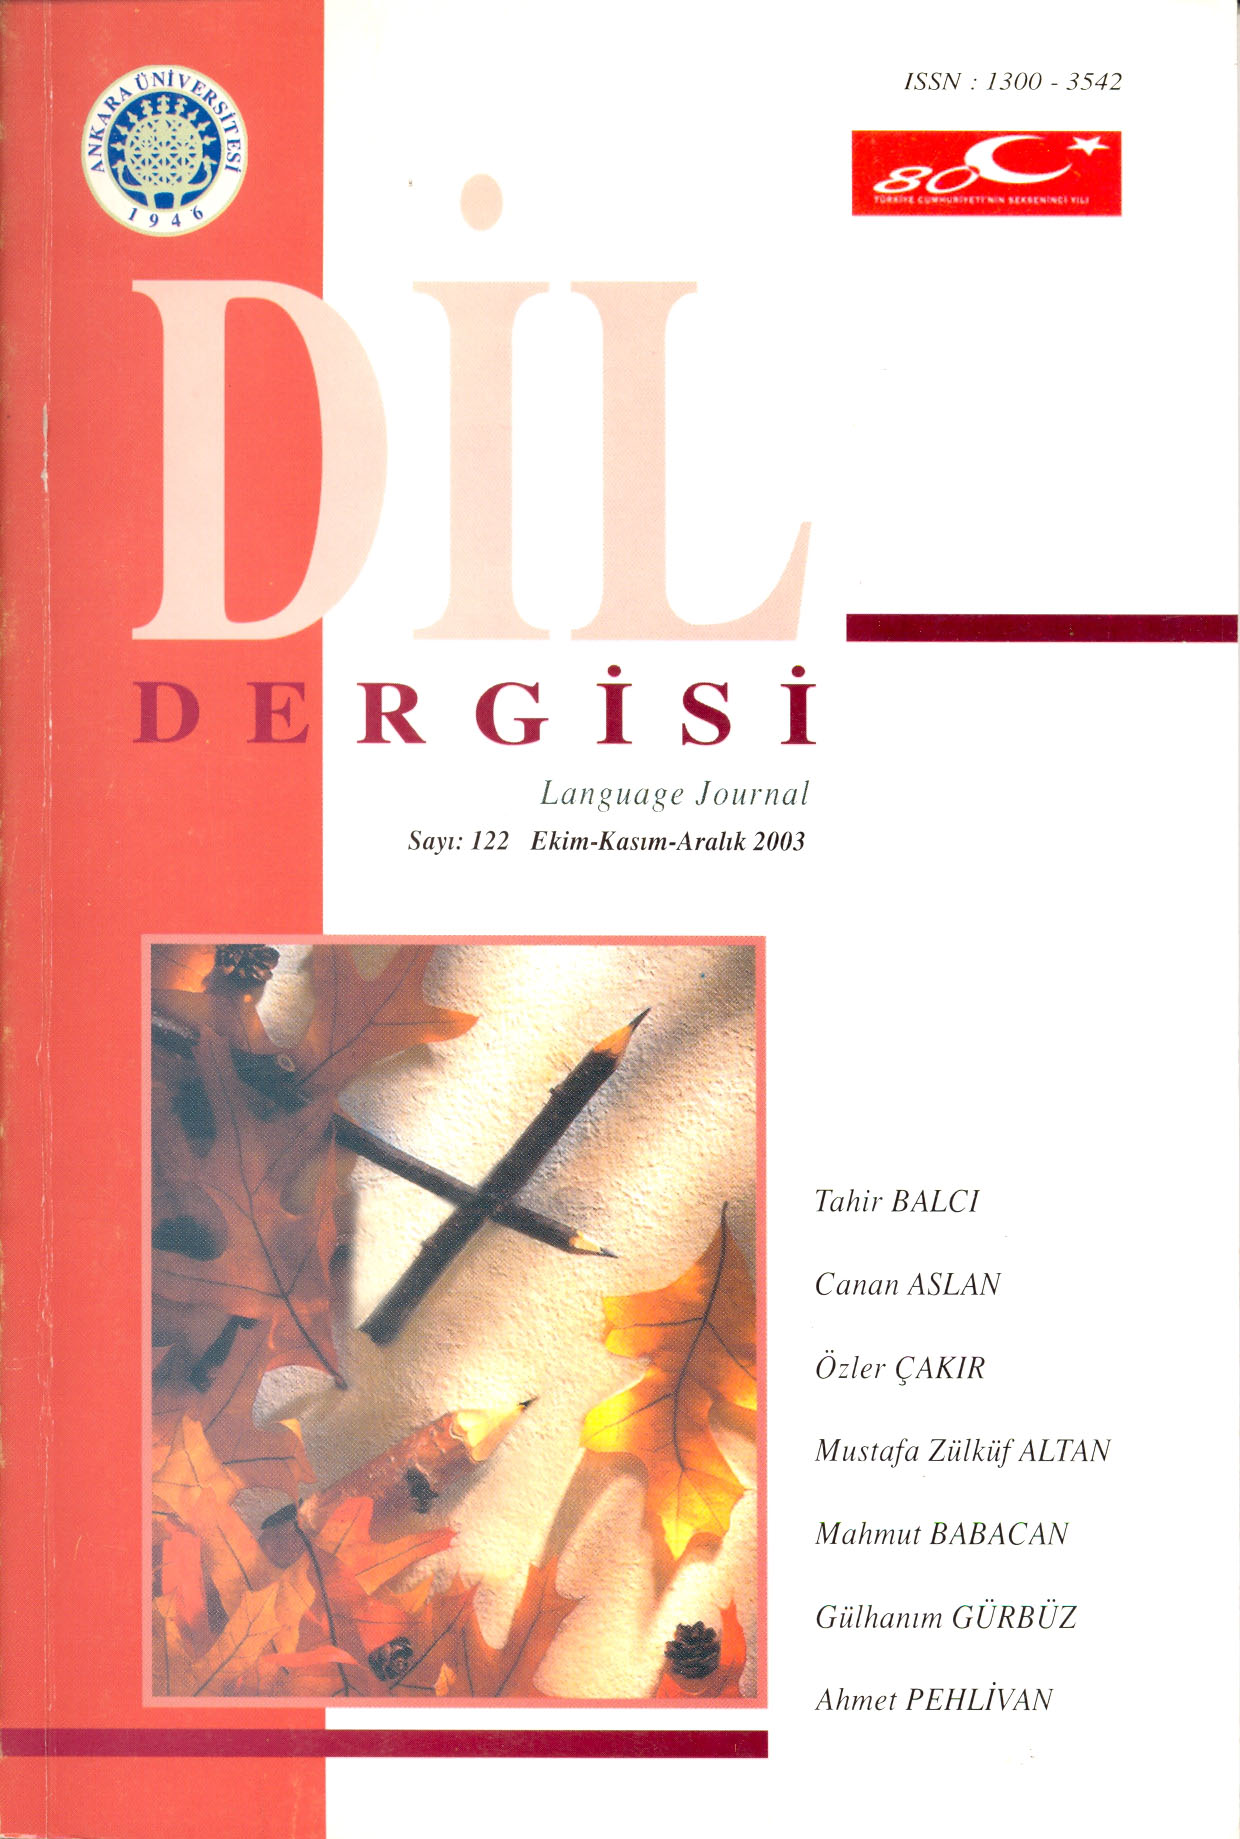 Grice, Memduh Şevket ESENDAL, Pazarlık, short story, linguistic method, dialogue. Cover Image